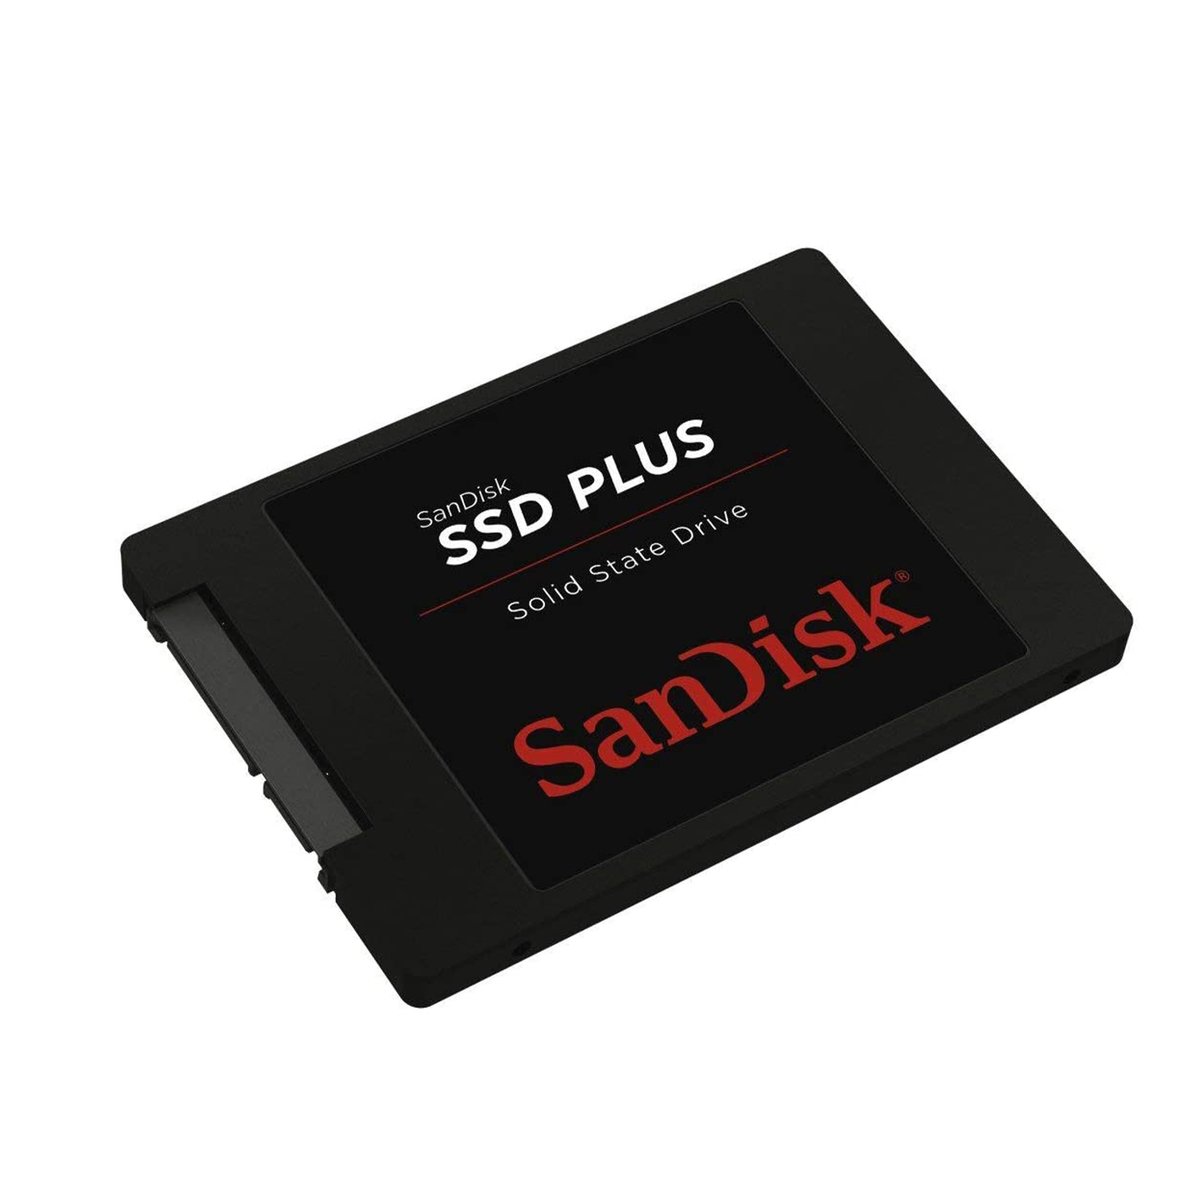 Sandisk Internal SSD SDSSDA-240G 240GB